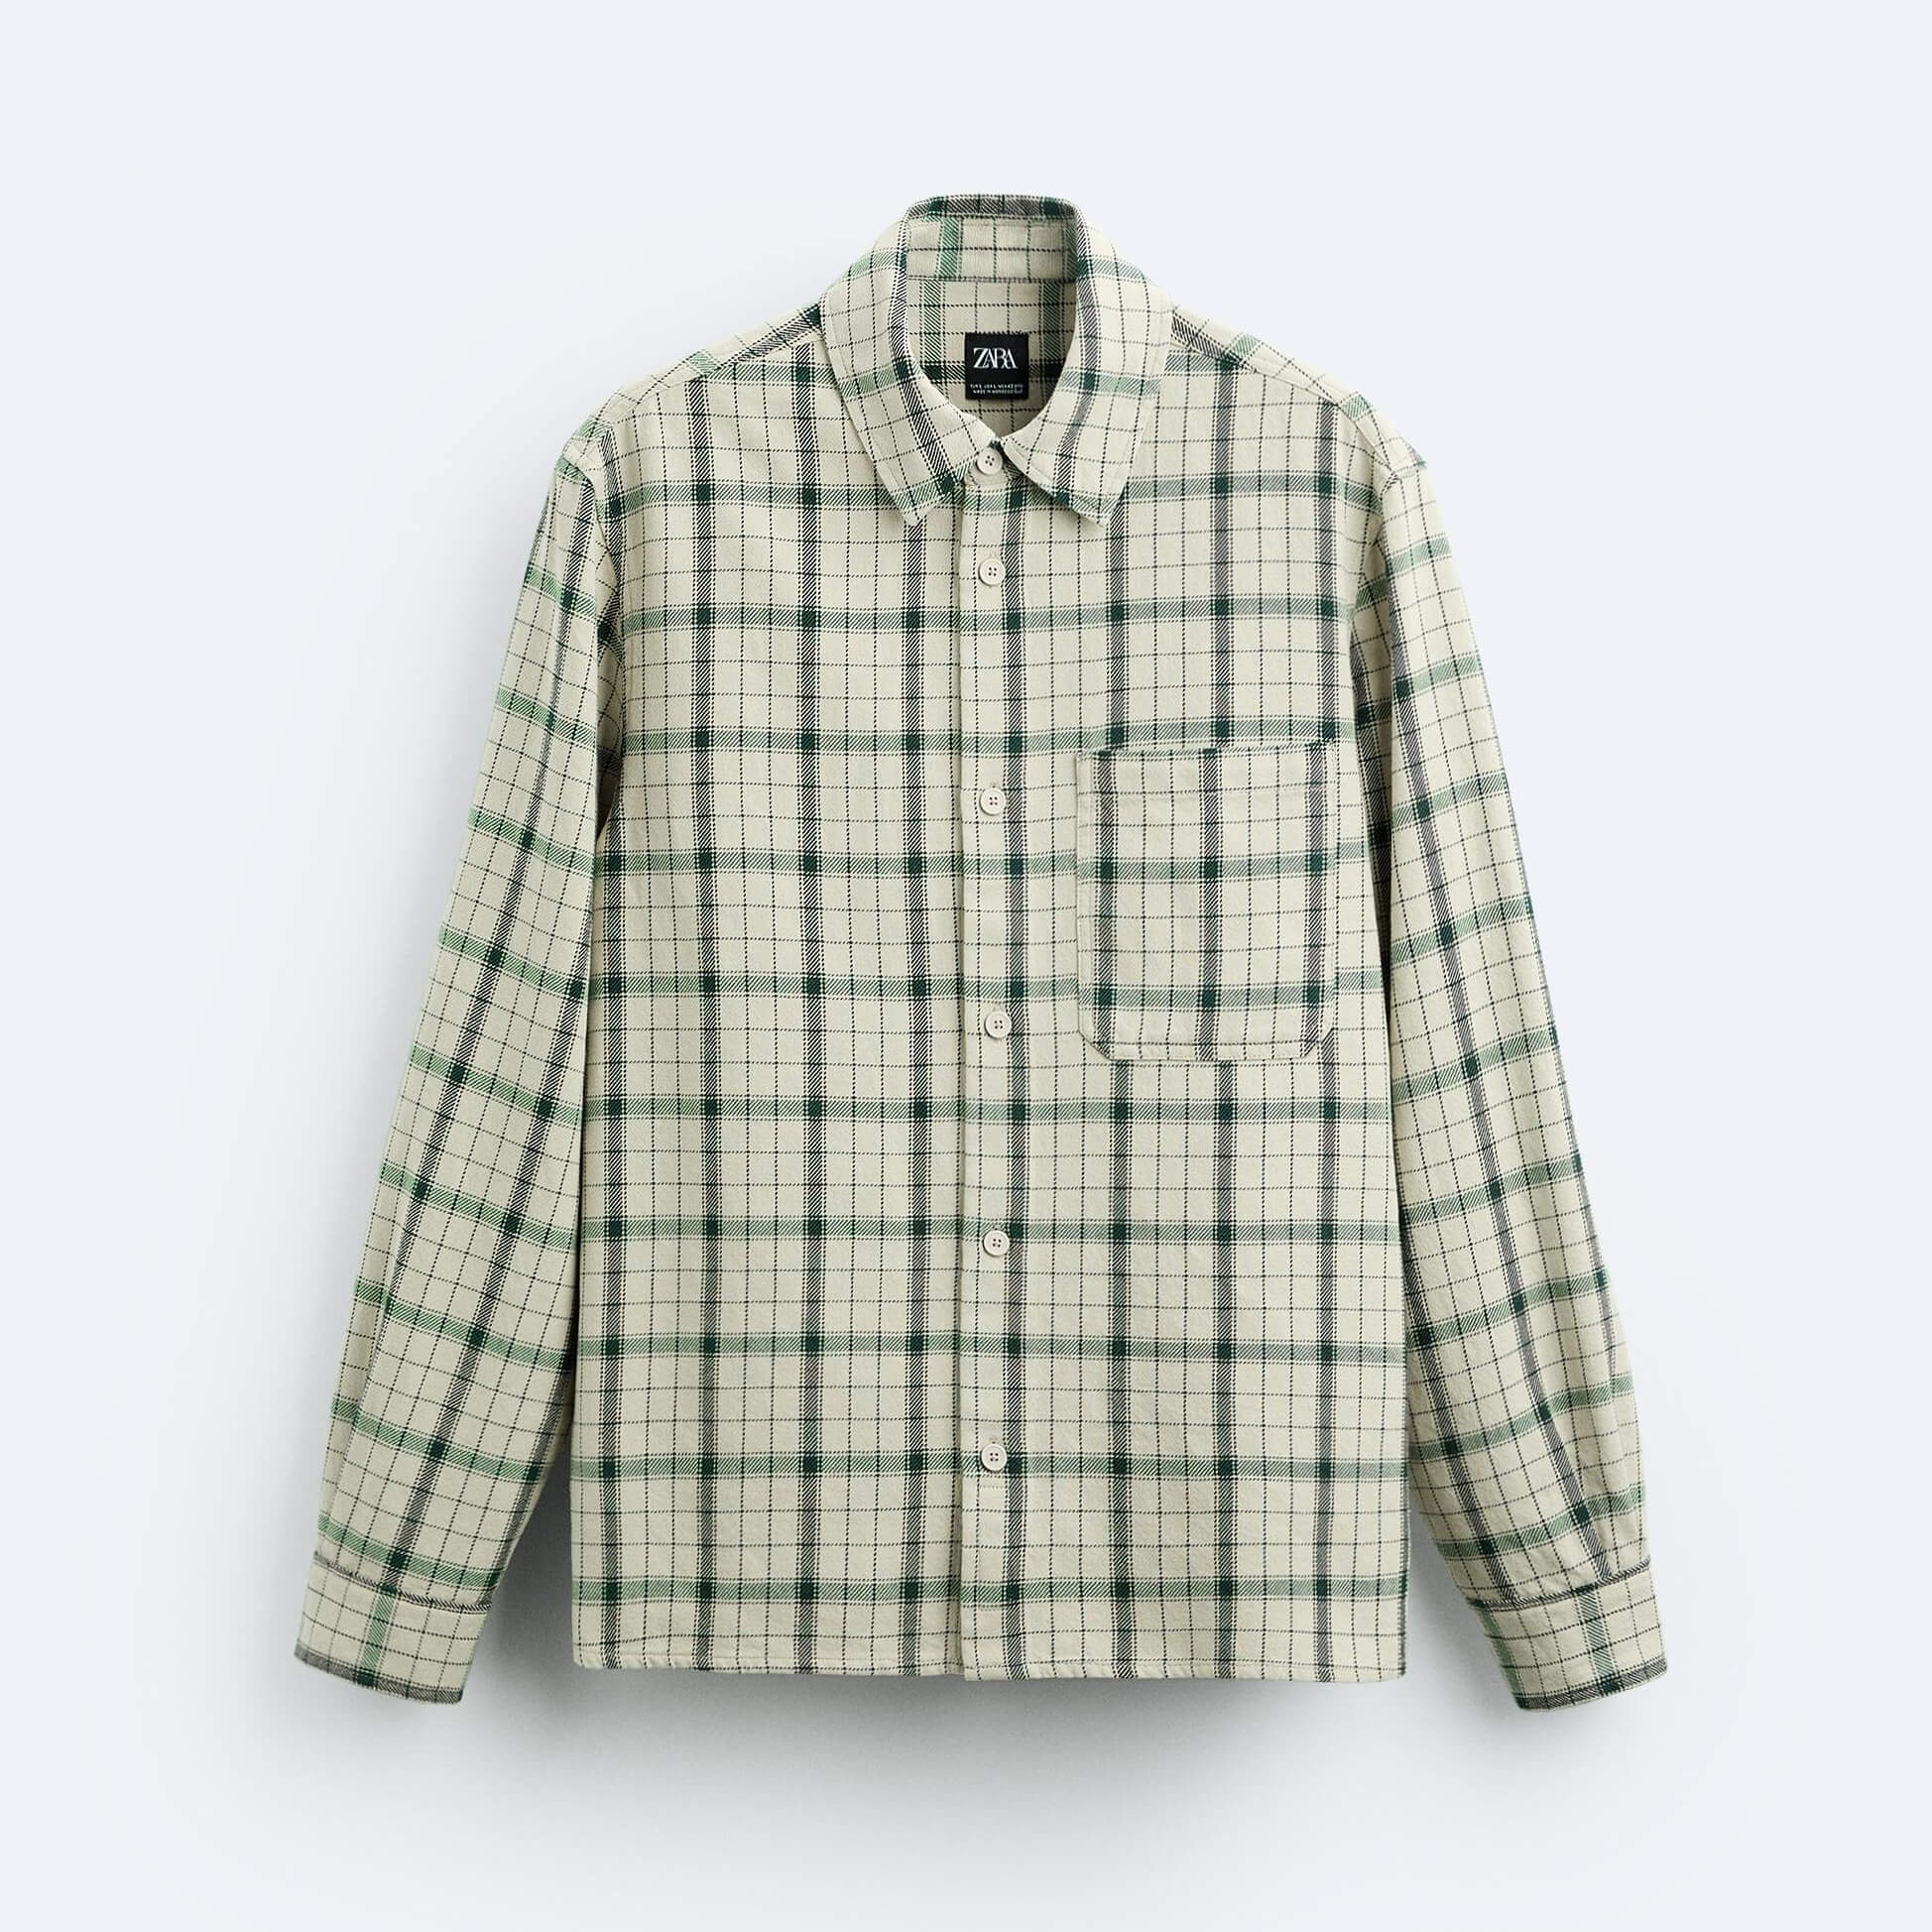 Рубашка верхняя Zara Check, светло-зеленый рубашка zara textured check зеленый экрю